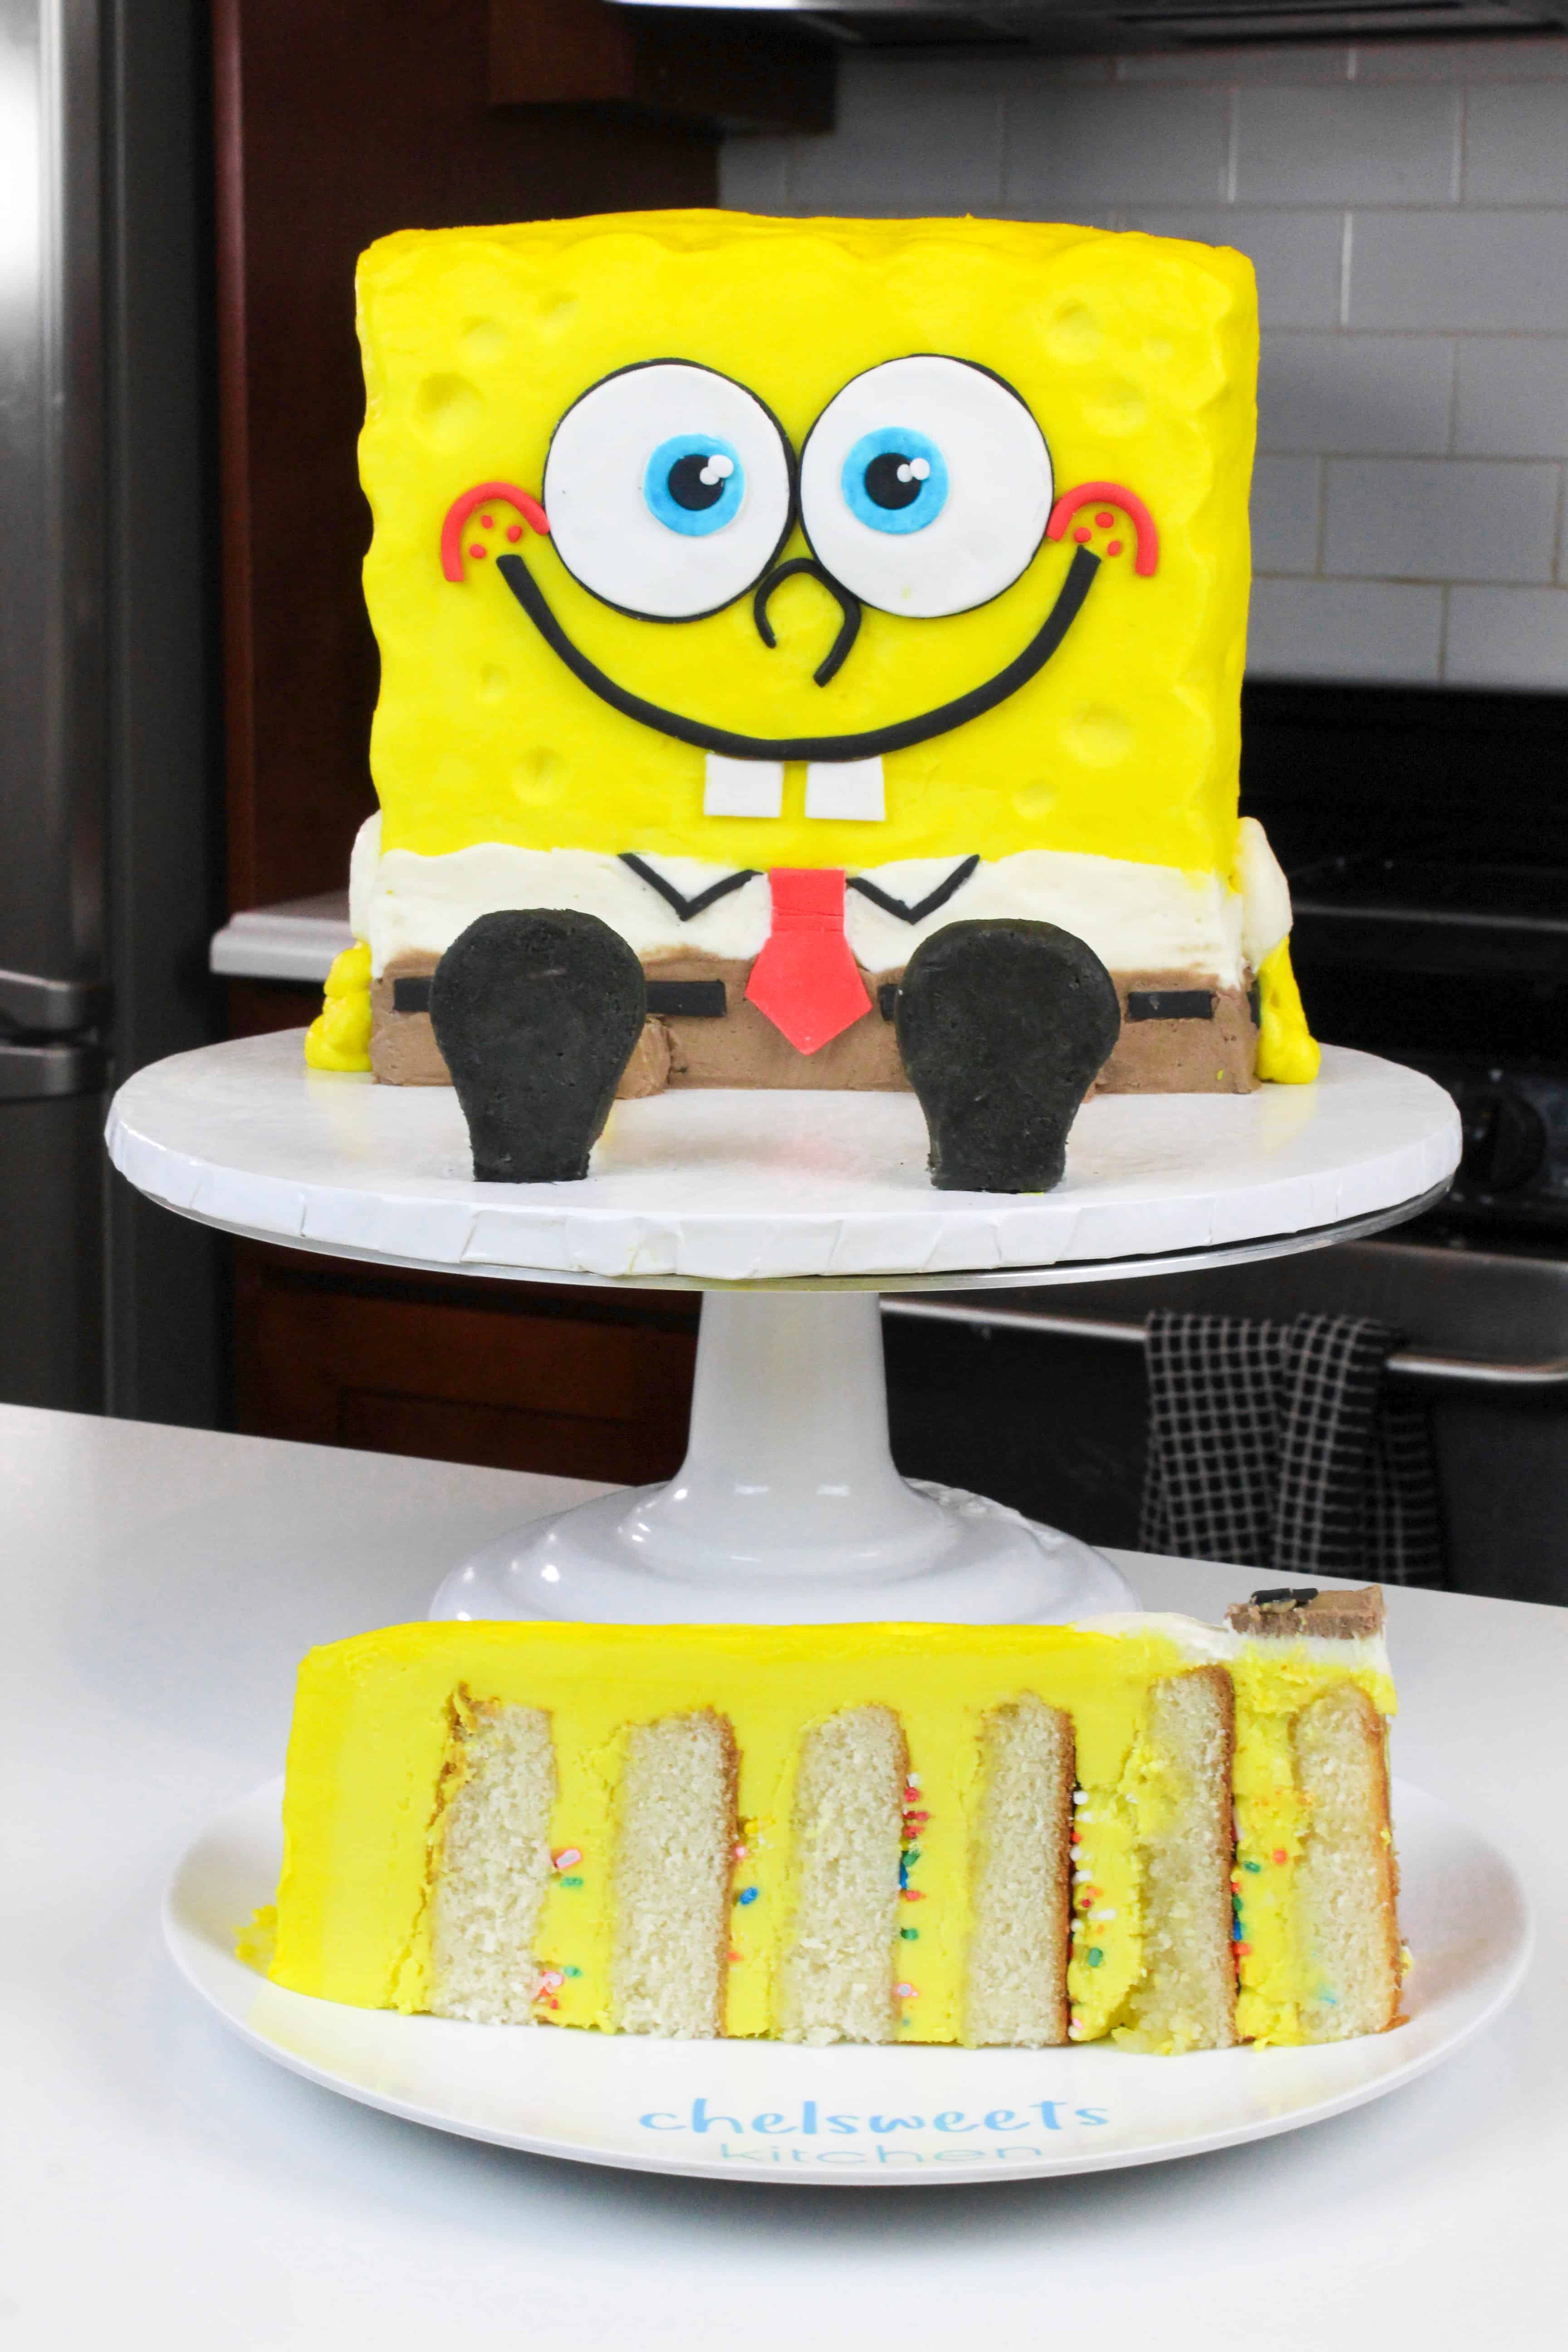 SpongeBob SquarePants Cake - Recipe And Tutorial